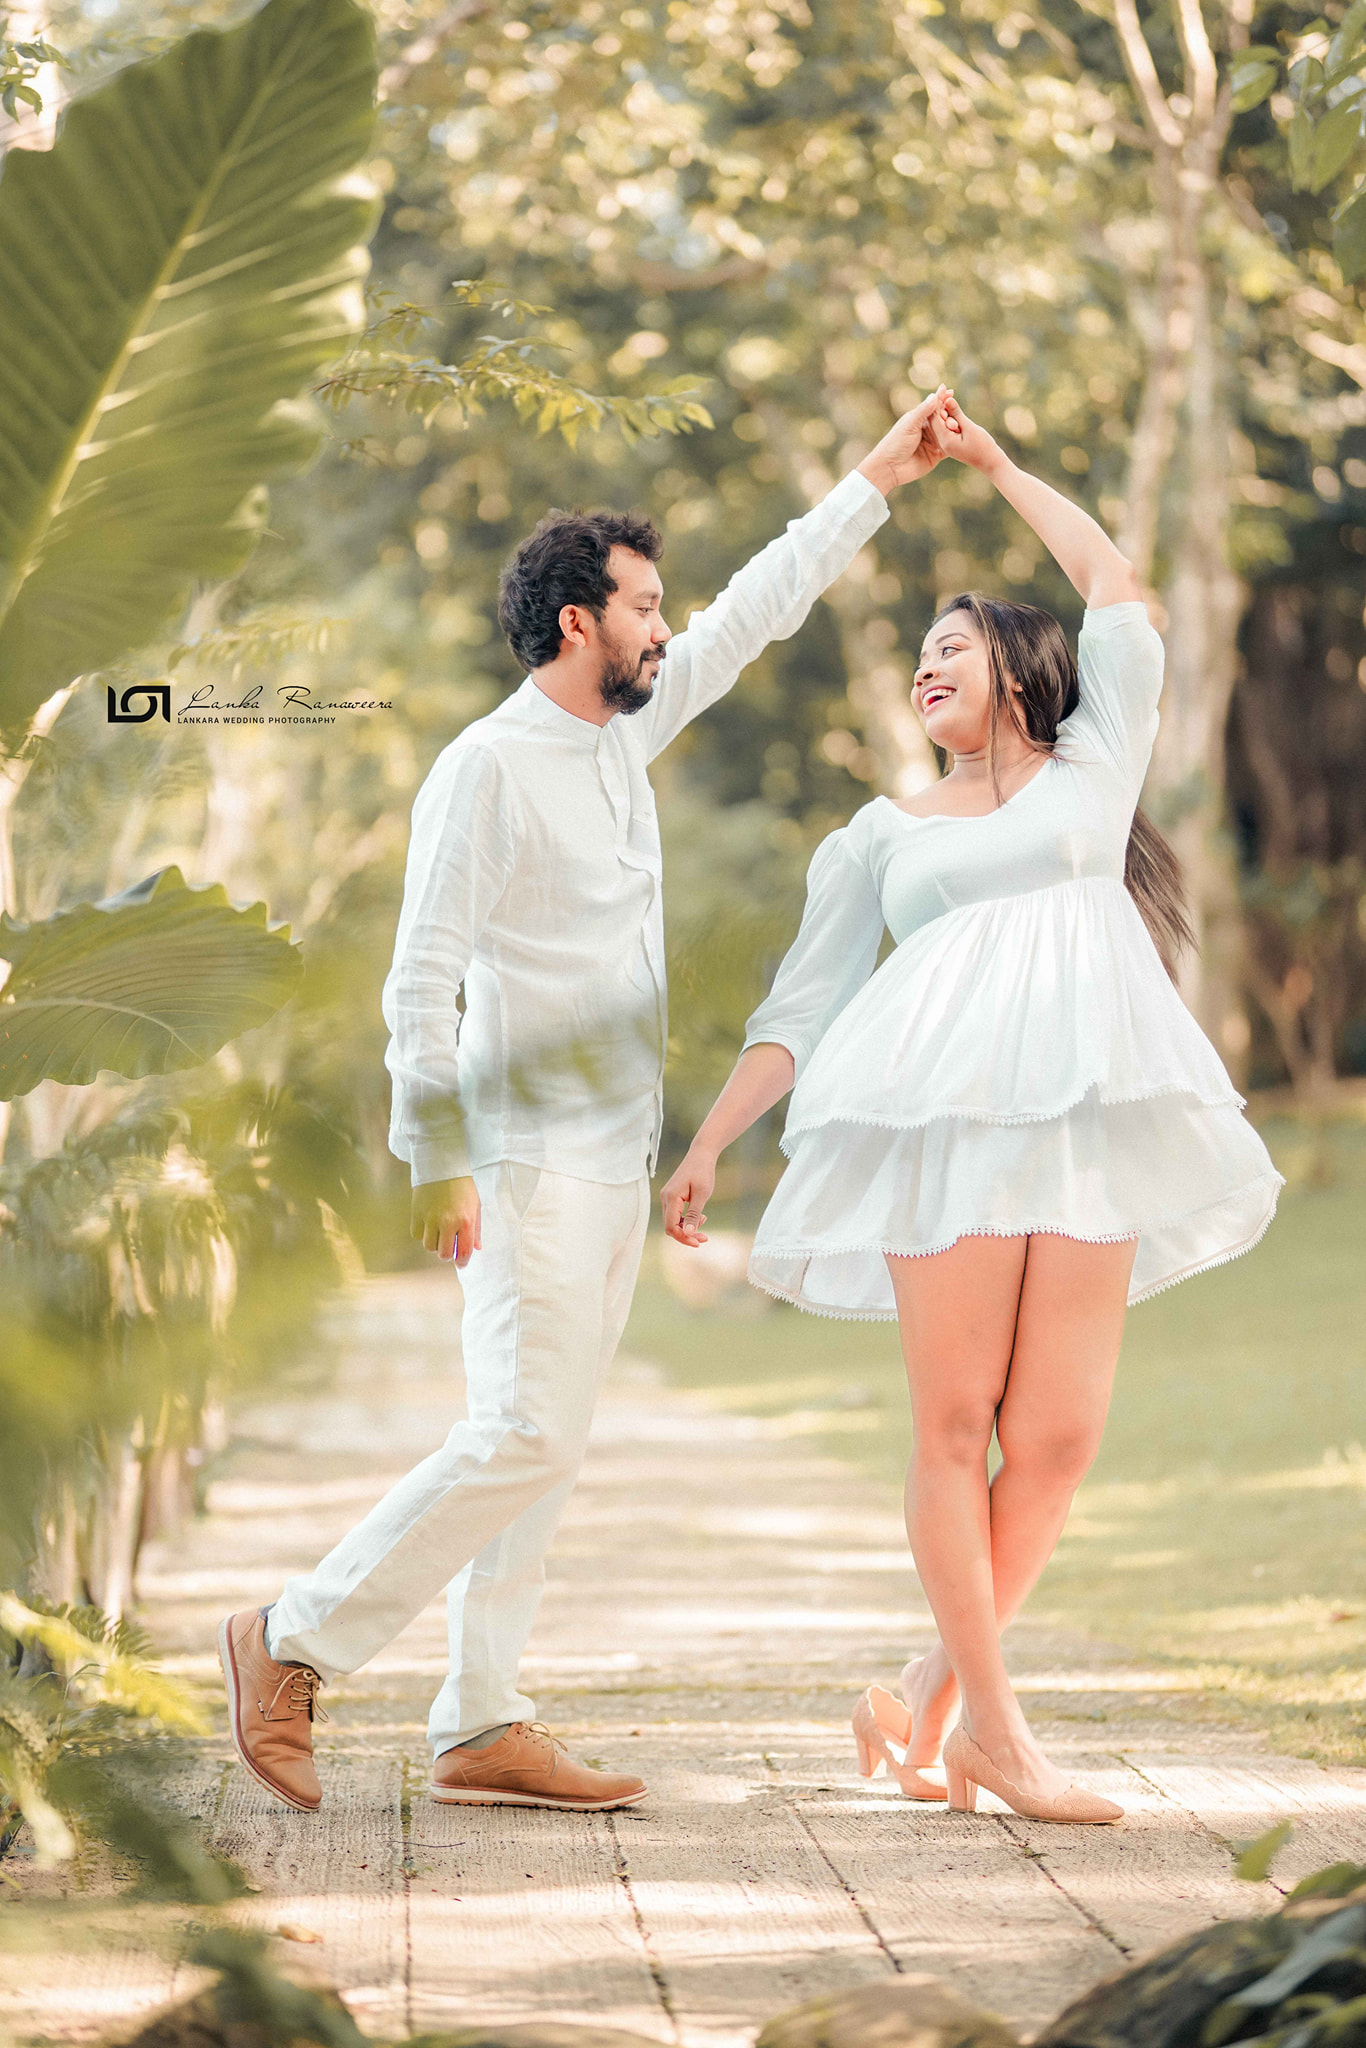 Outdoor Pre-Wedding Photoshoot Dresses Ideas - Happy Wedding App